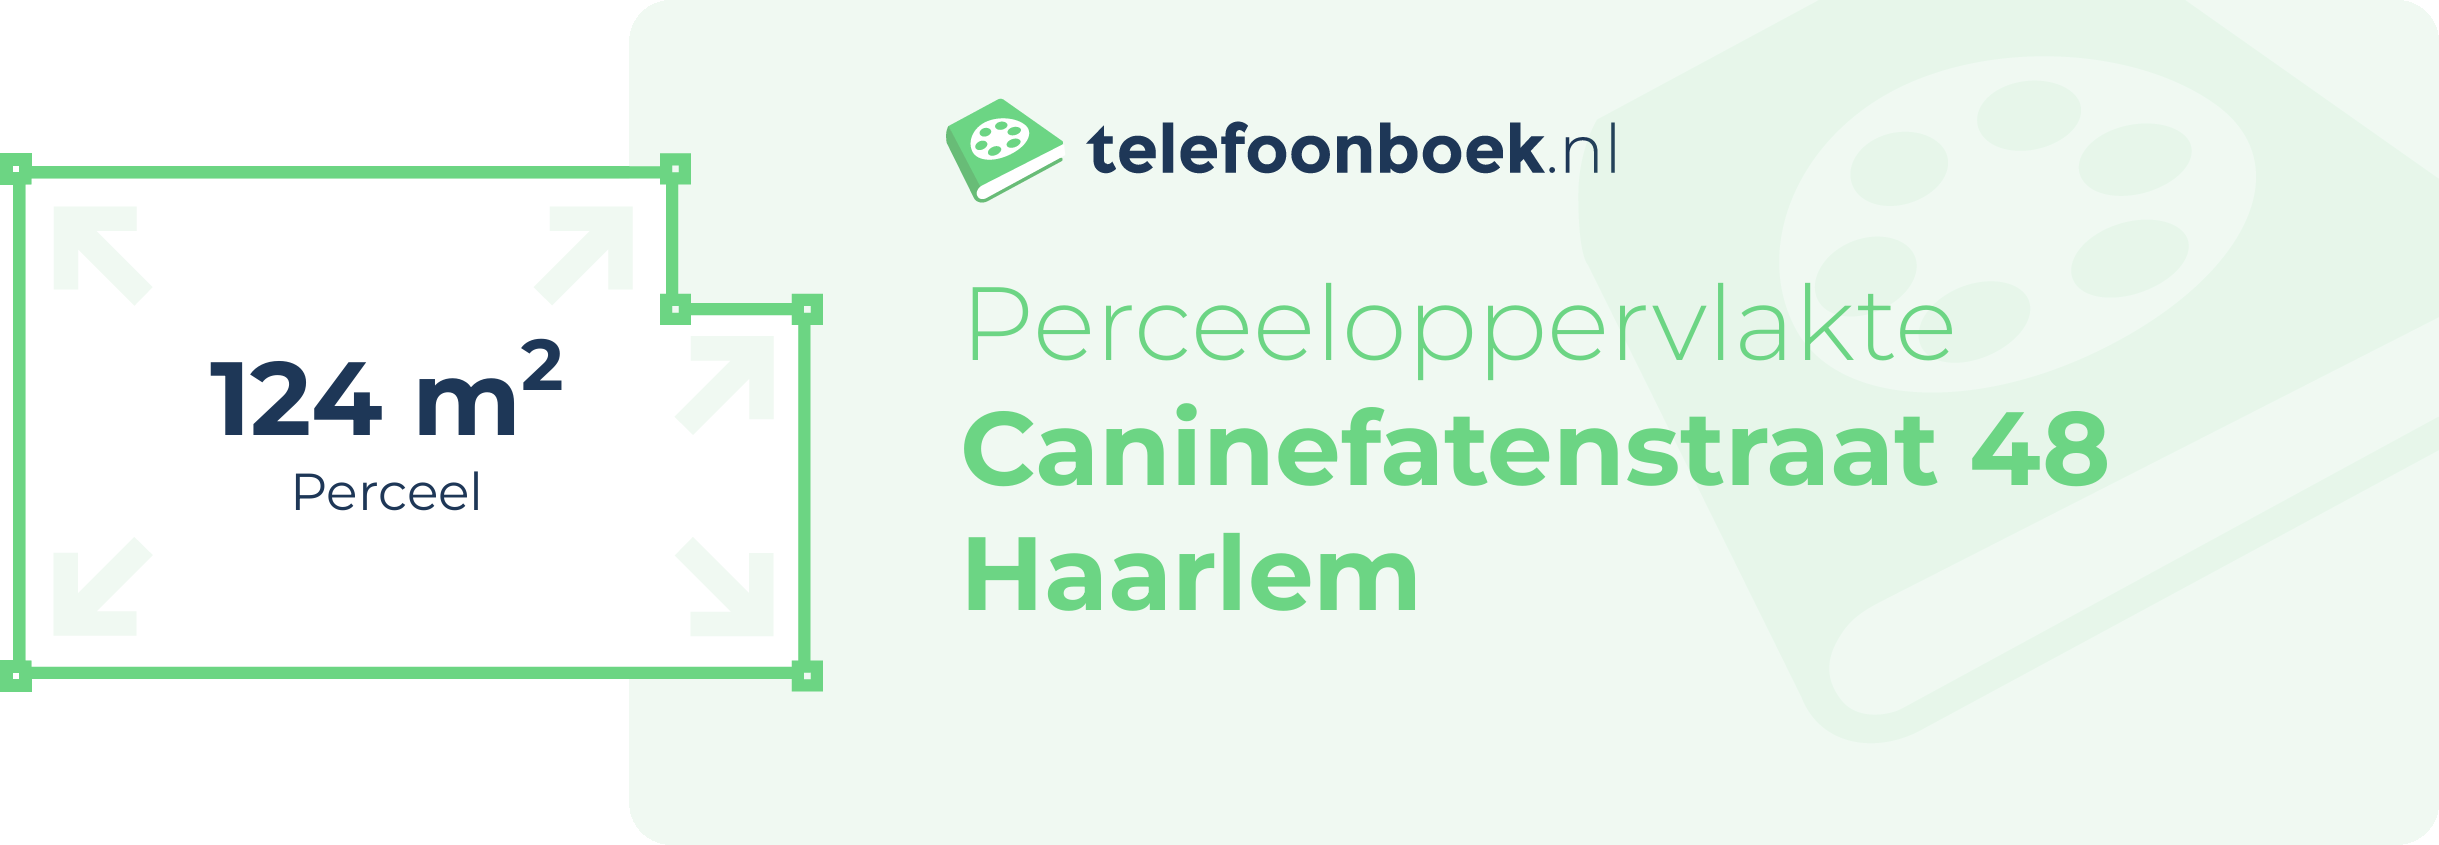 Perceeloppervlakte Caninefatenstraat 48 Haarlem